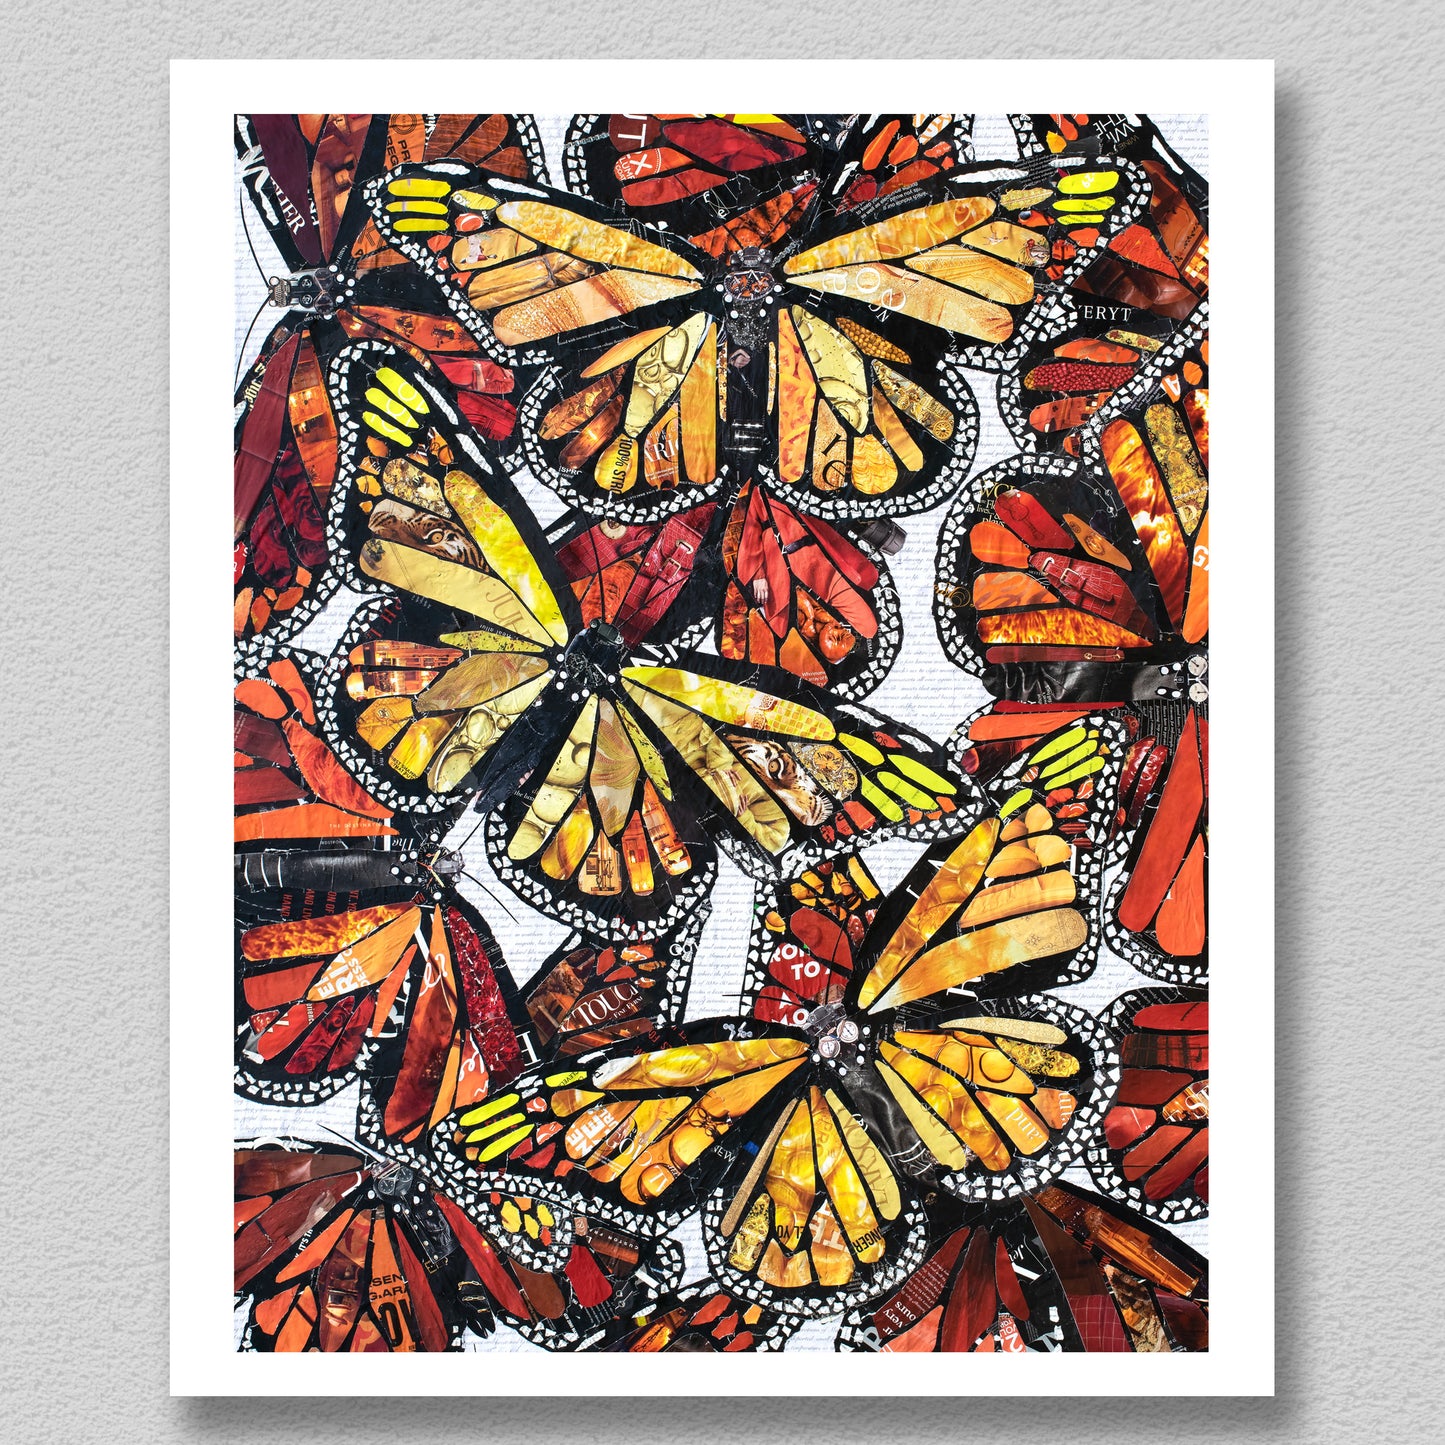 Monarchs in Flight